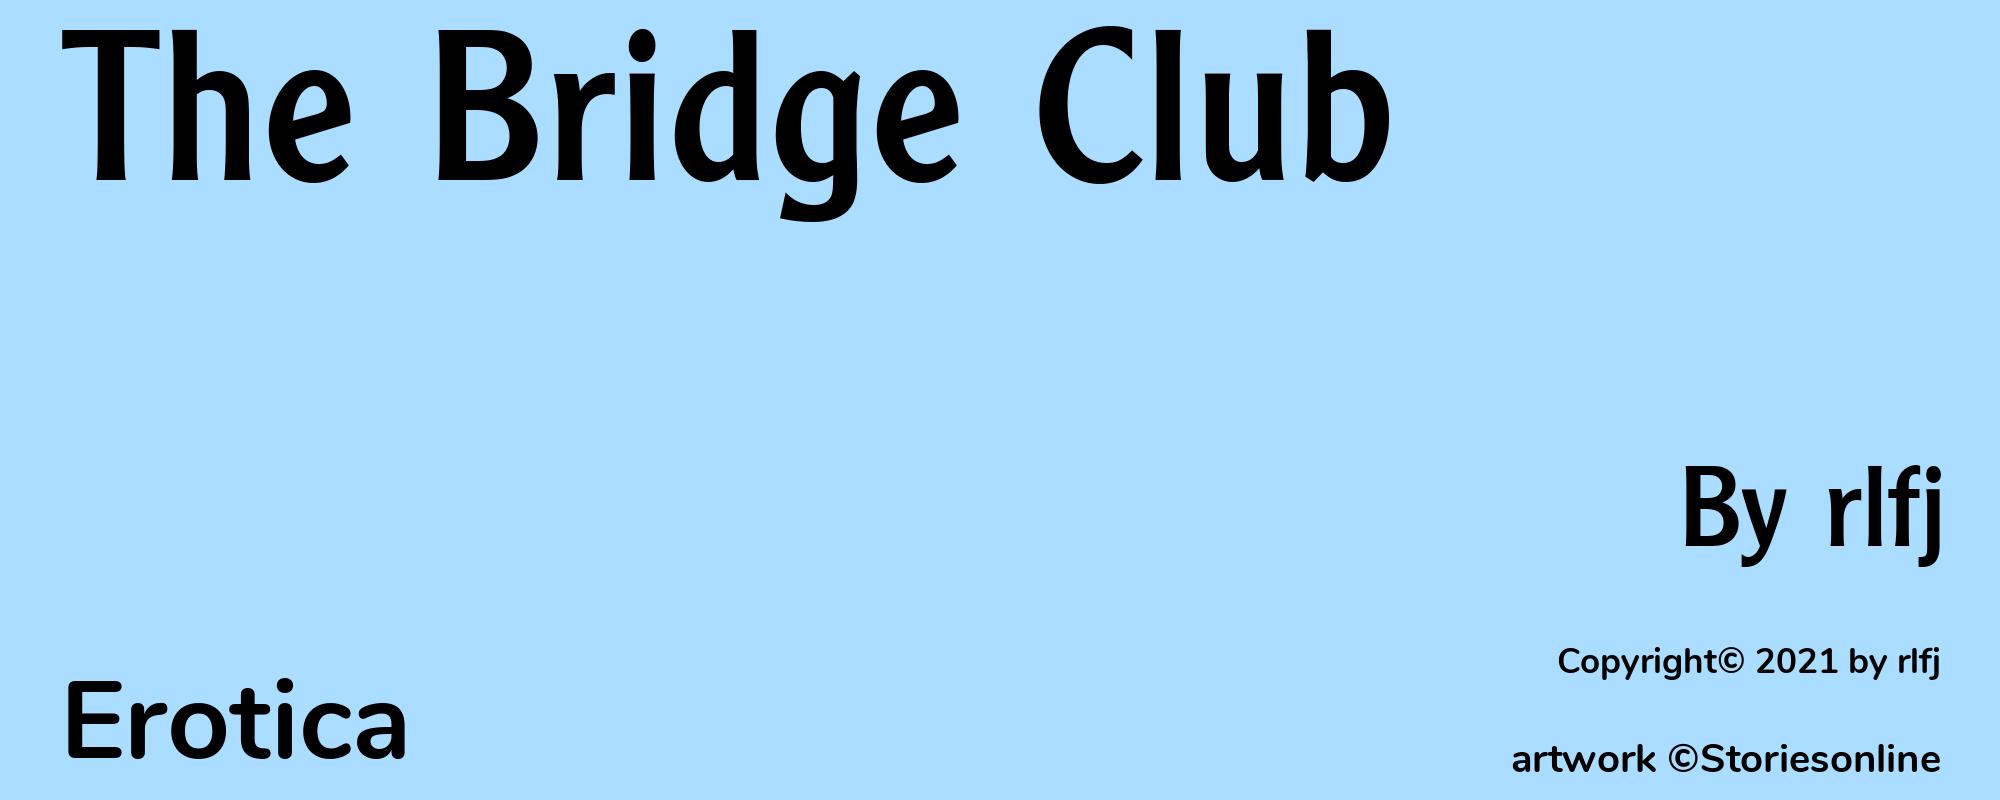 The Bridge Club - Cover